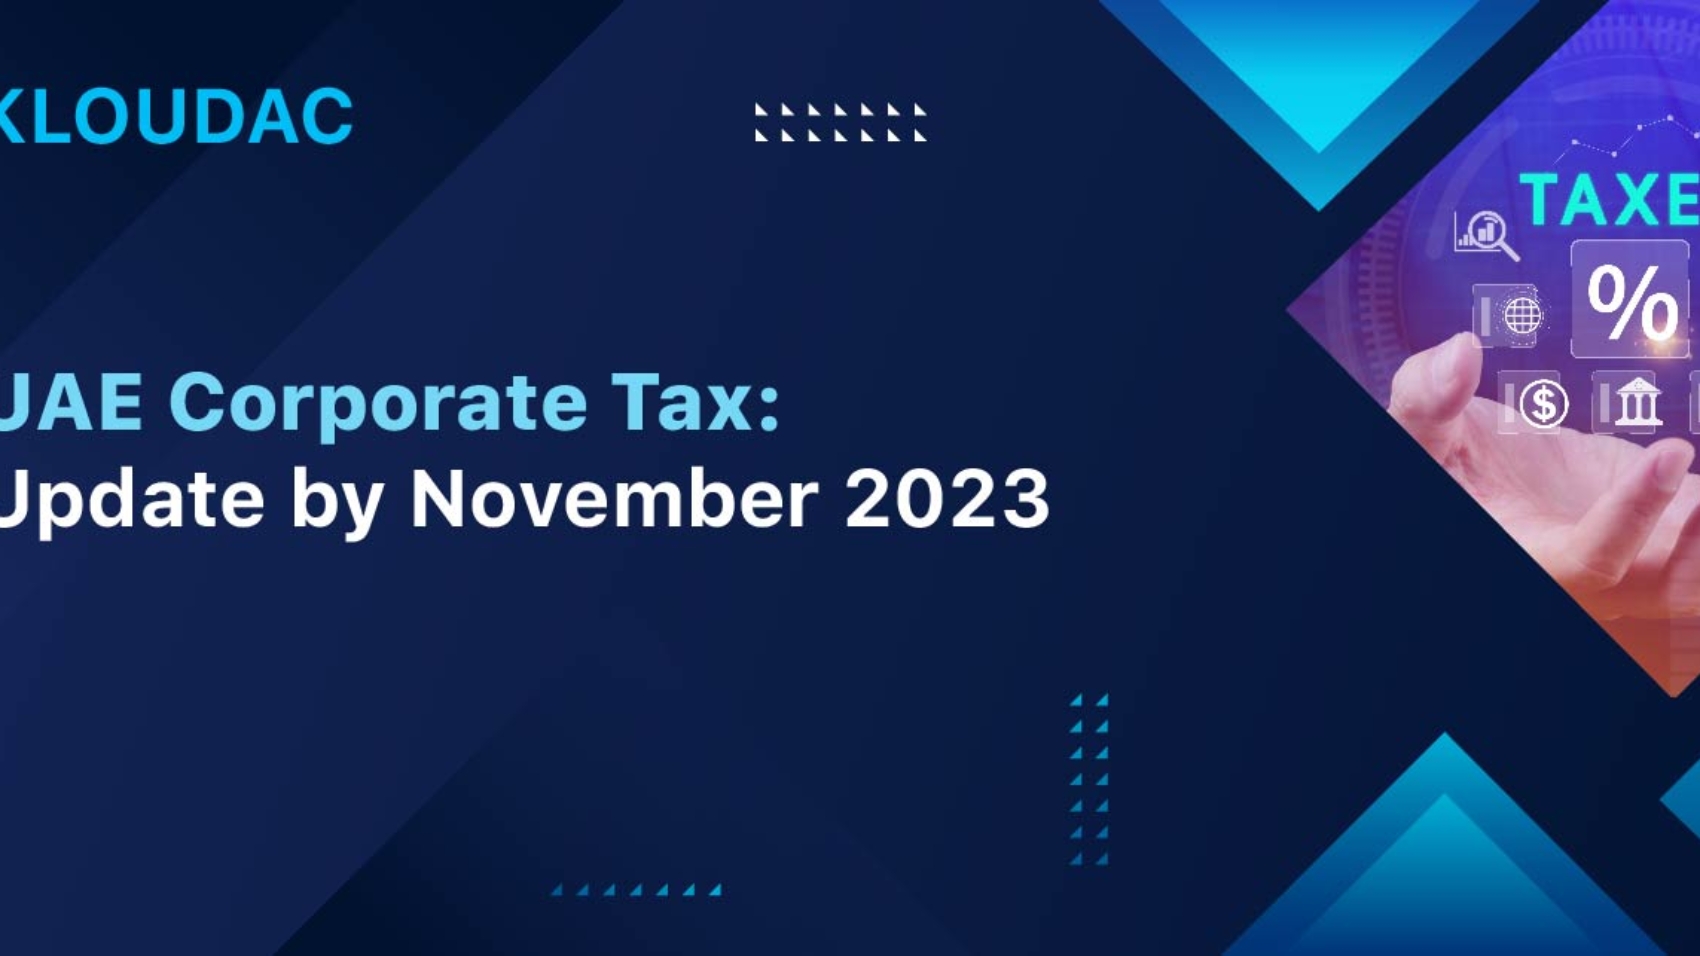 UAE Corporate Tax: Update by November 2023